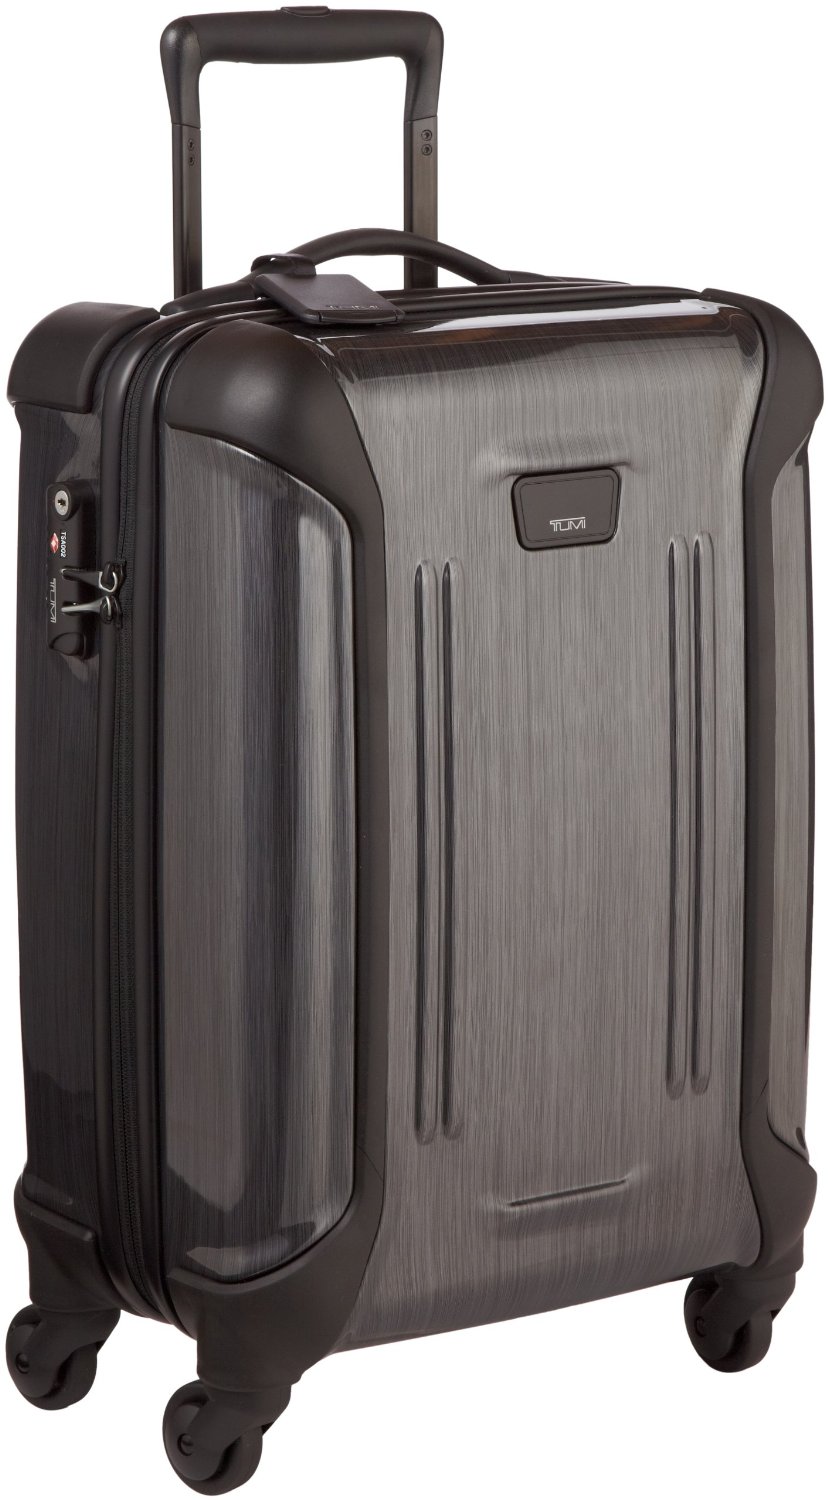 Bag organizer bed bath and beyond jobs, international travel luggage ...